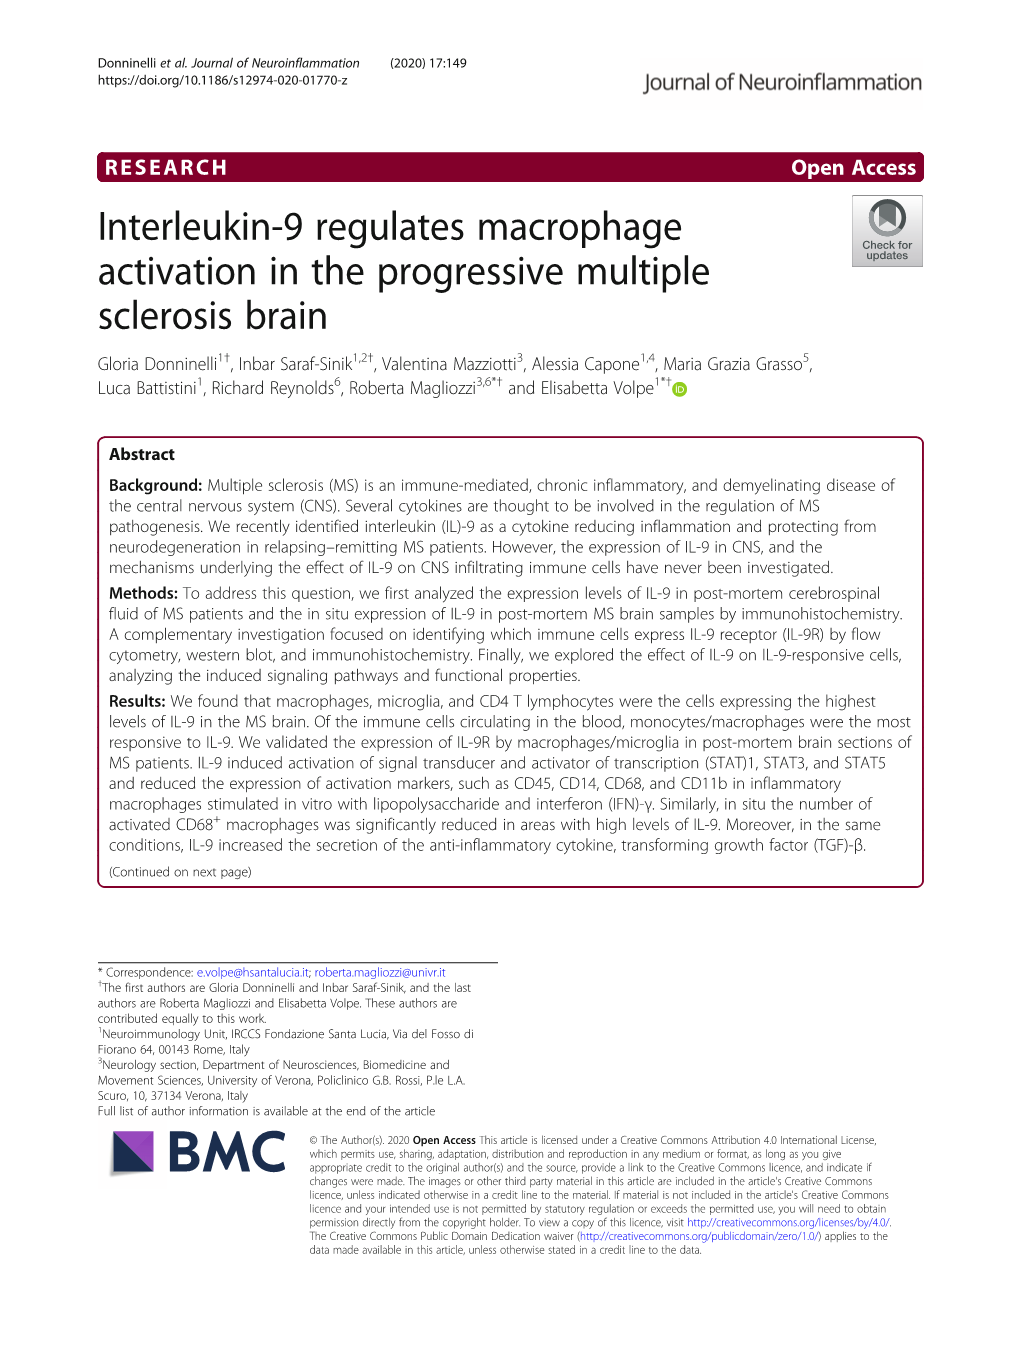 Interleukin-9 Regulates Macrophage Activation in the Progressive Multiple Sclerosis Brain